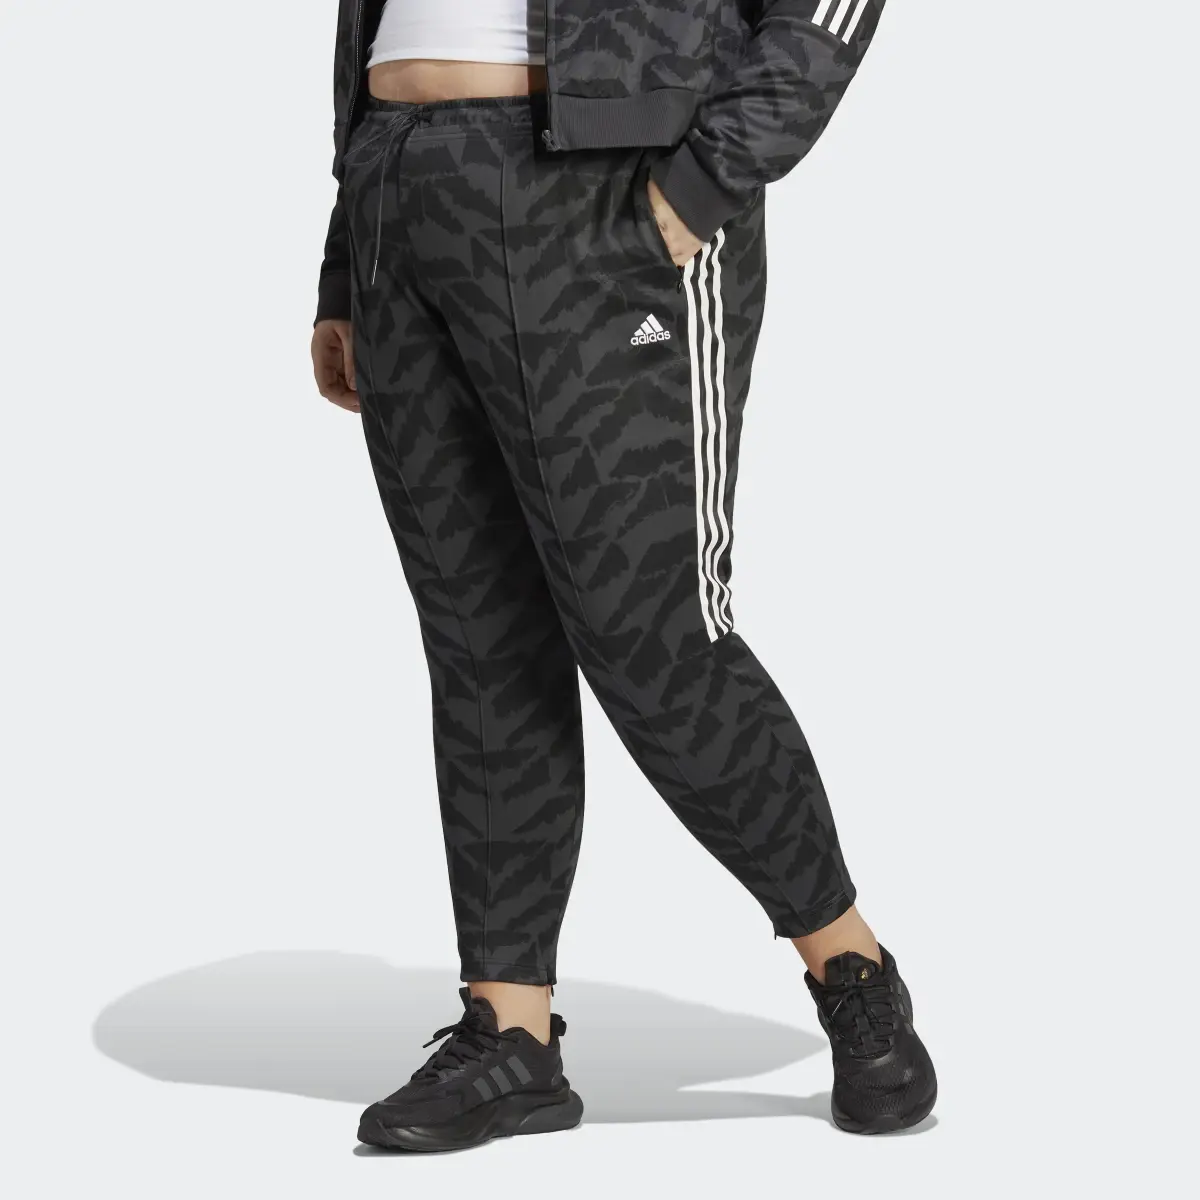 Adidas Tiro Suit Up Lifestyle Trainingshose – Große Größen. 1